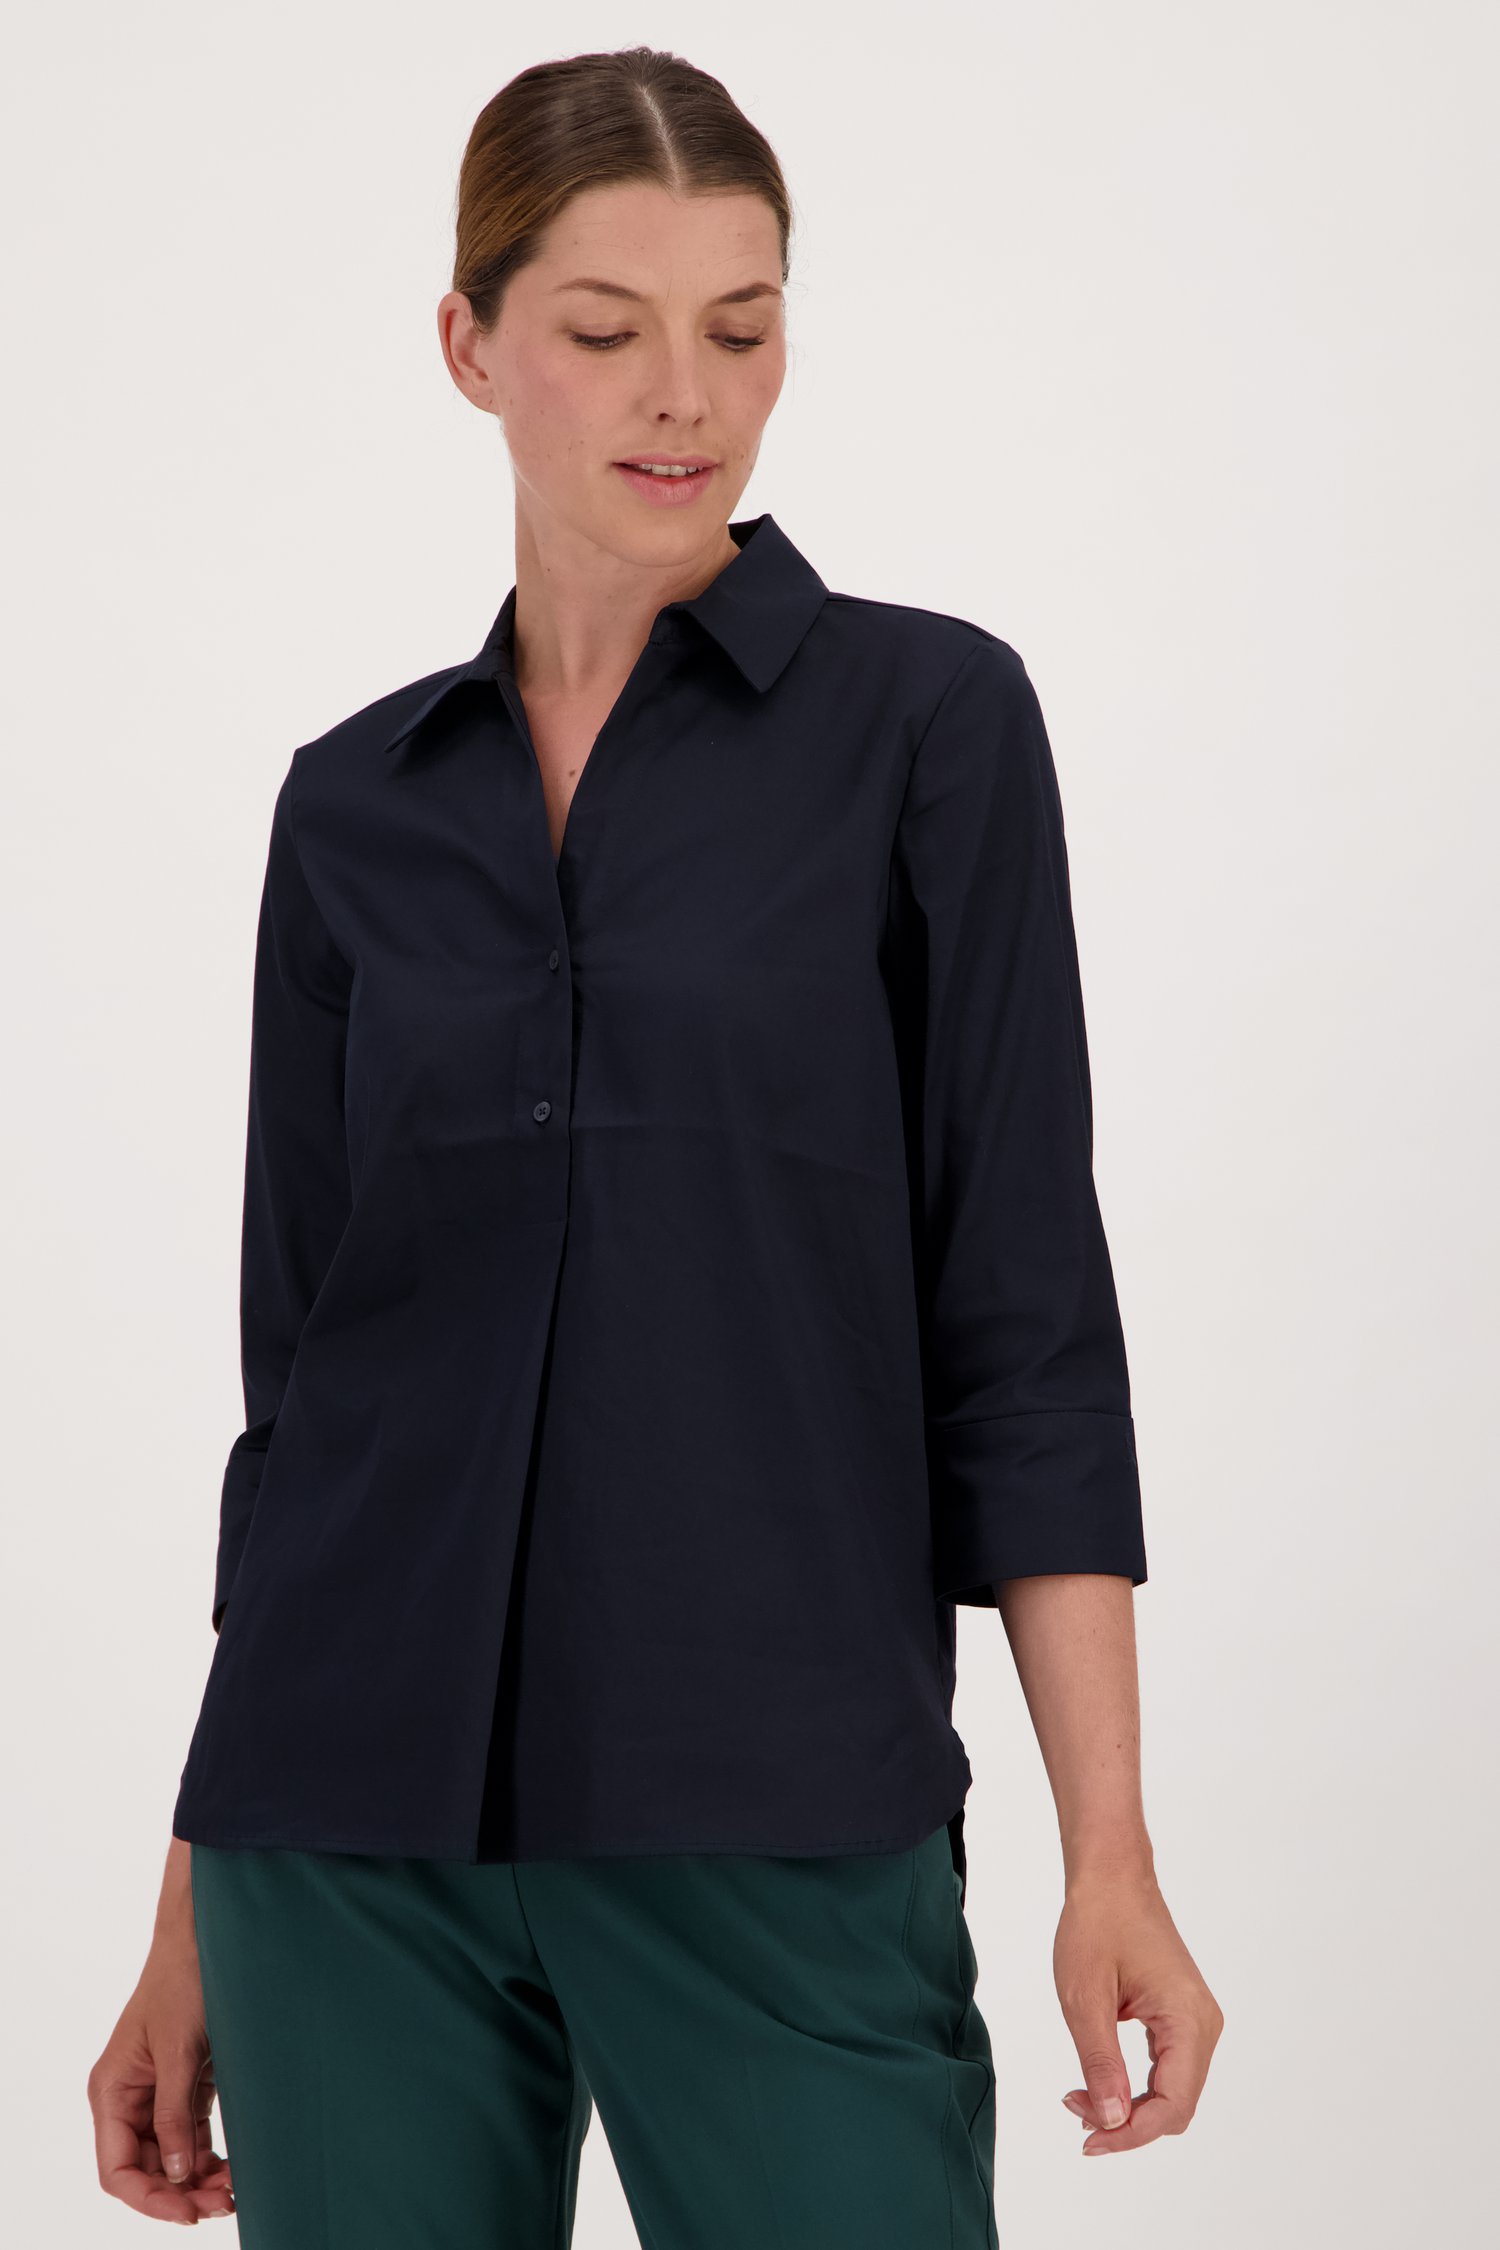 Winkelcentrum iets onwettig Donkerblauwe blouse met 3/4 mouwen van Opus | 3190488 | e5